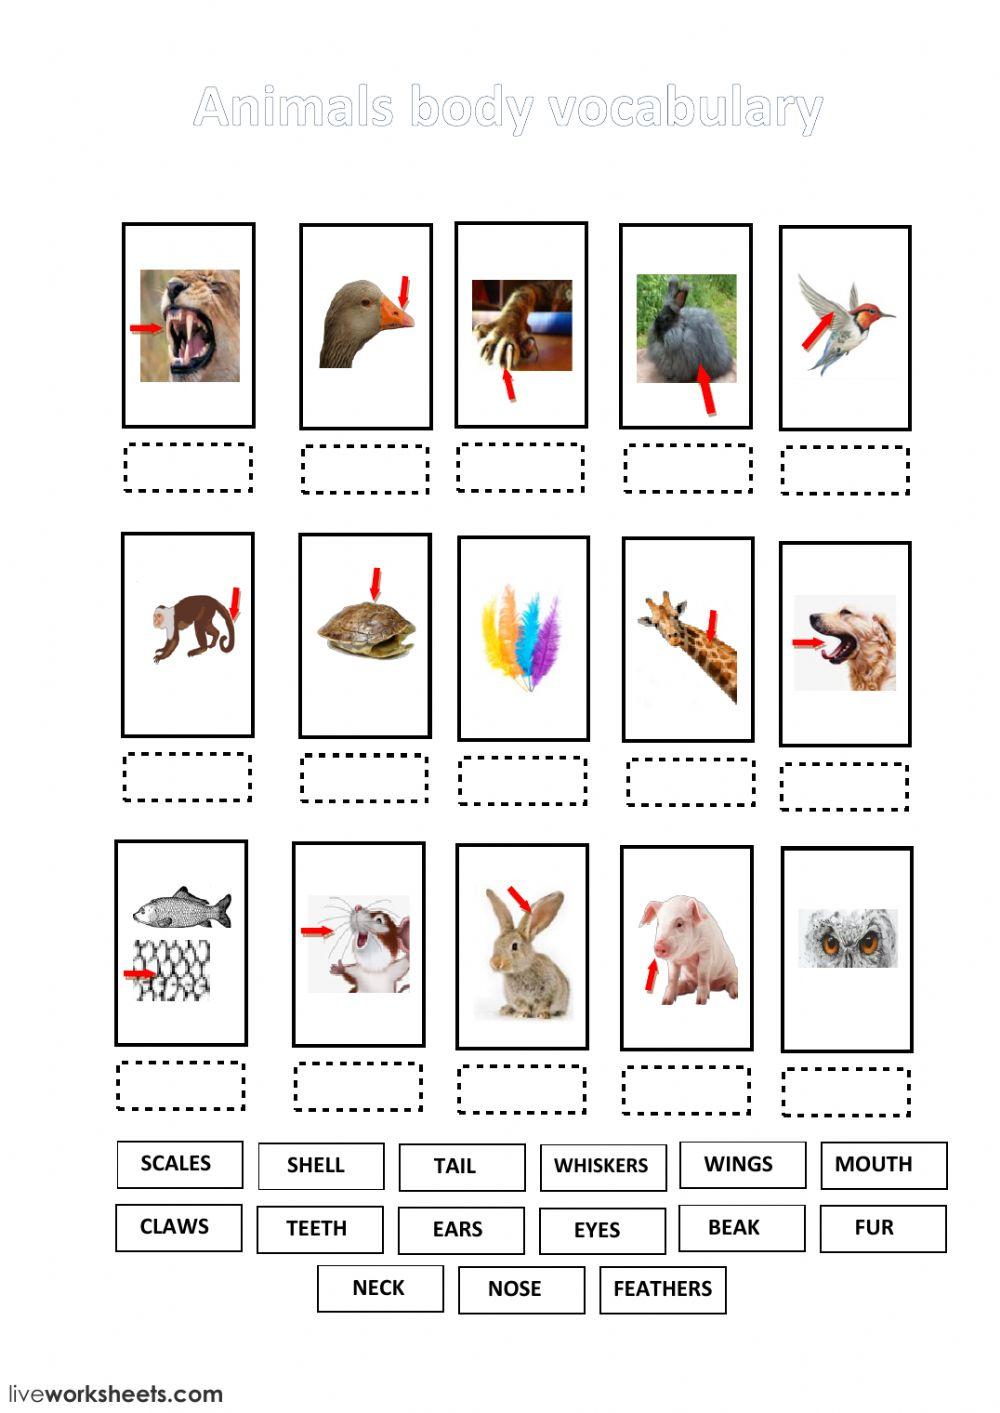 Animals body vocabulary